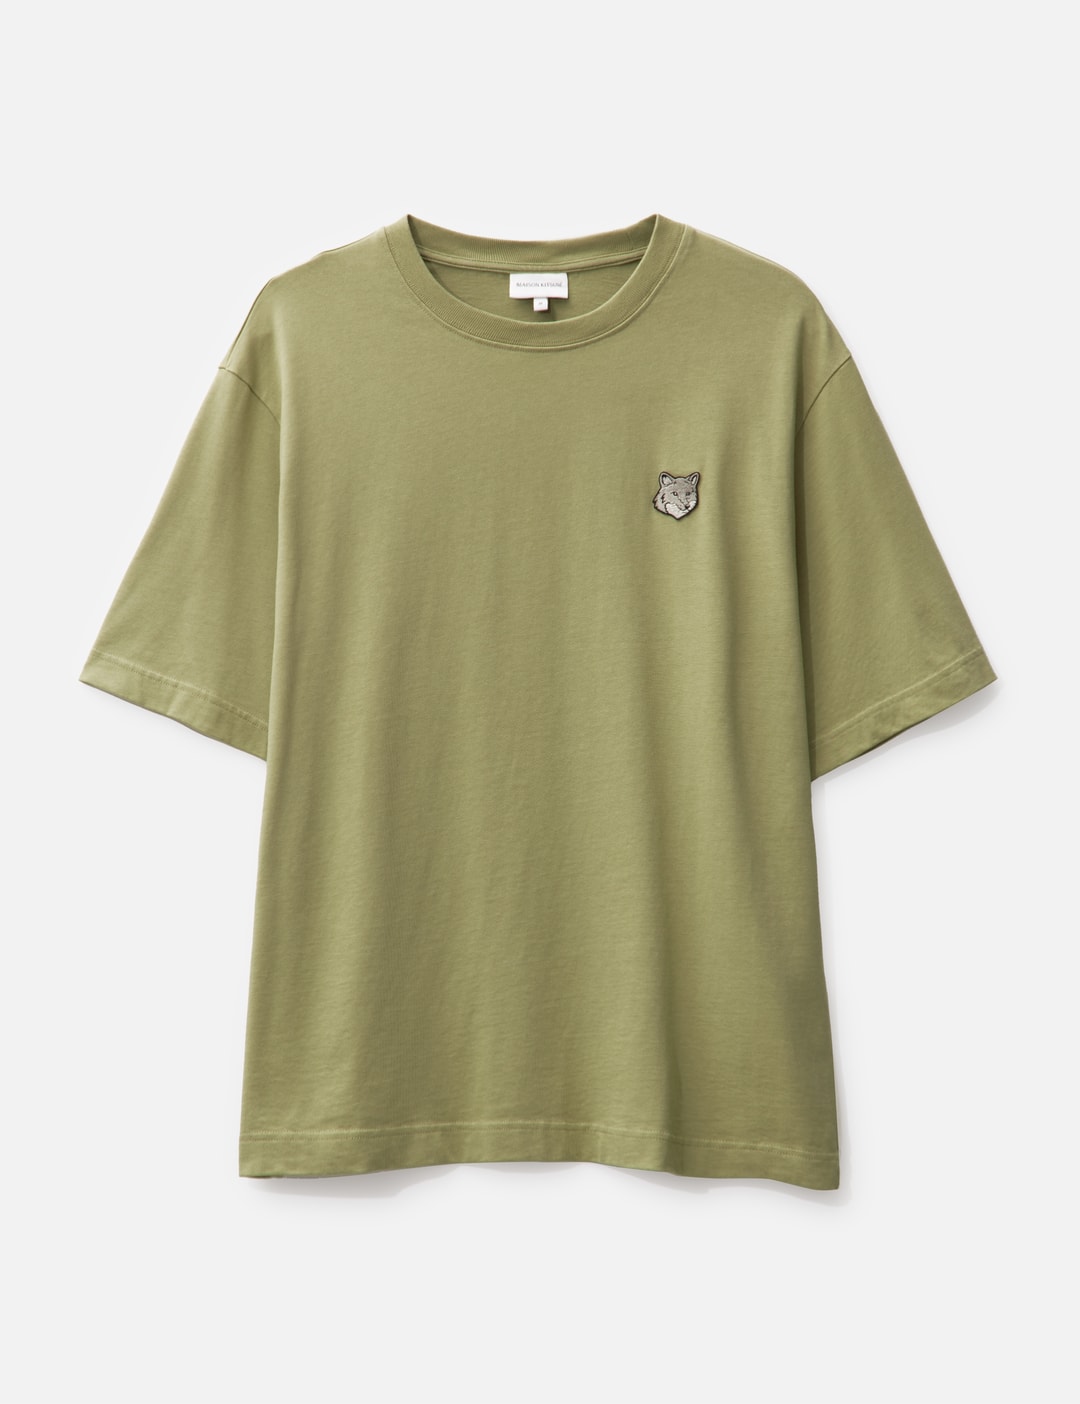 Shop Fox T-Shirts online